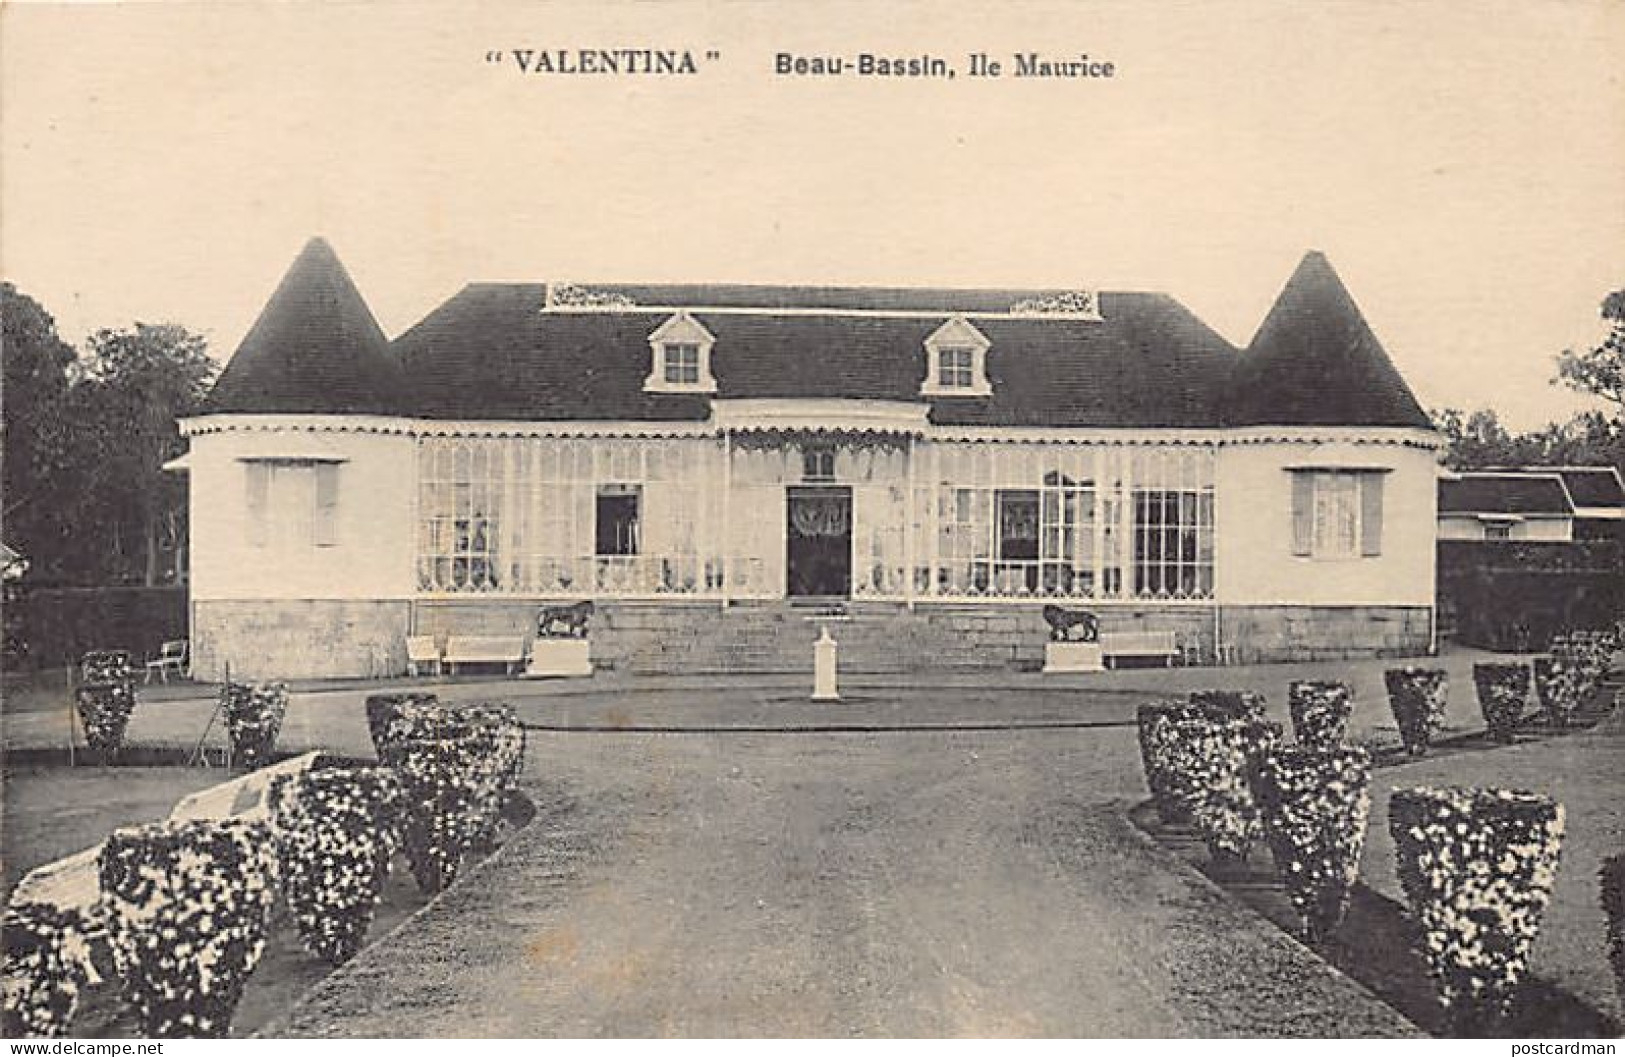 Mauritius - BEAU-BASSIN - Valentina 1 - Publ. Unis France. - Maurice